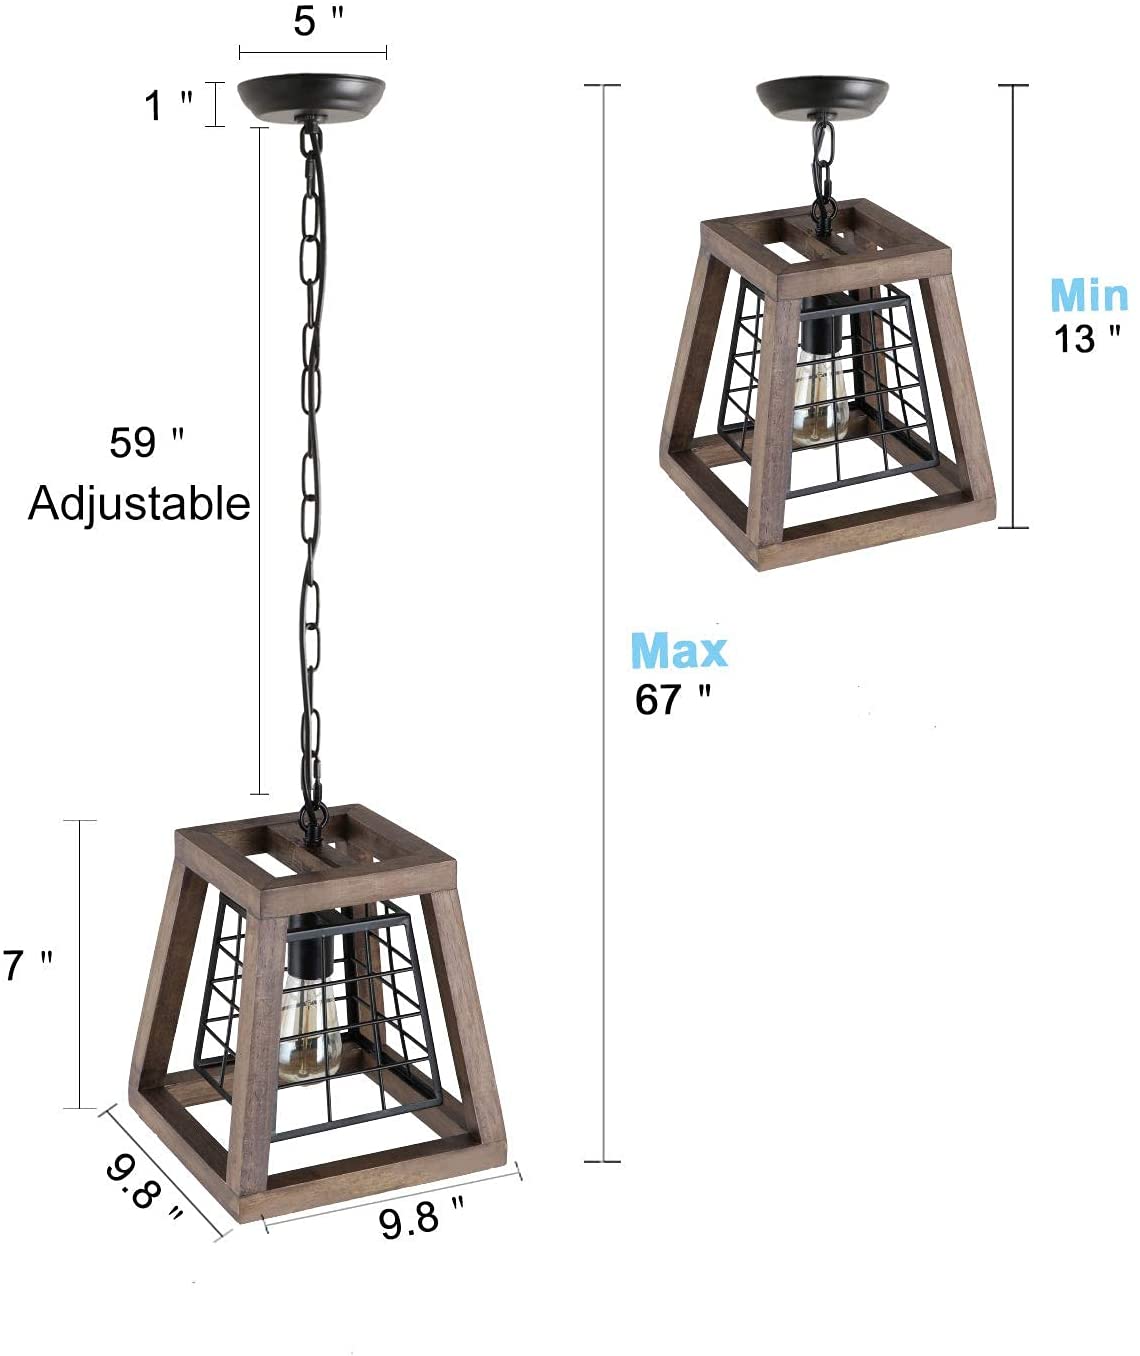 Wood industrial pendant light farmhouse island cage chandelier